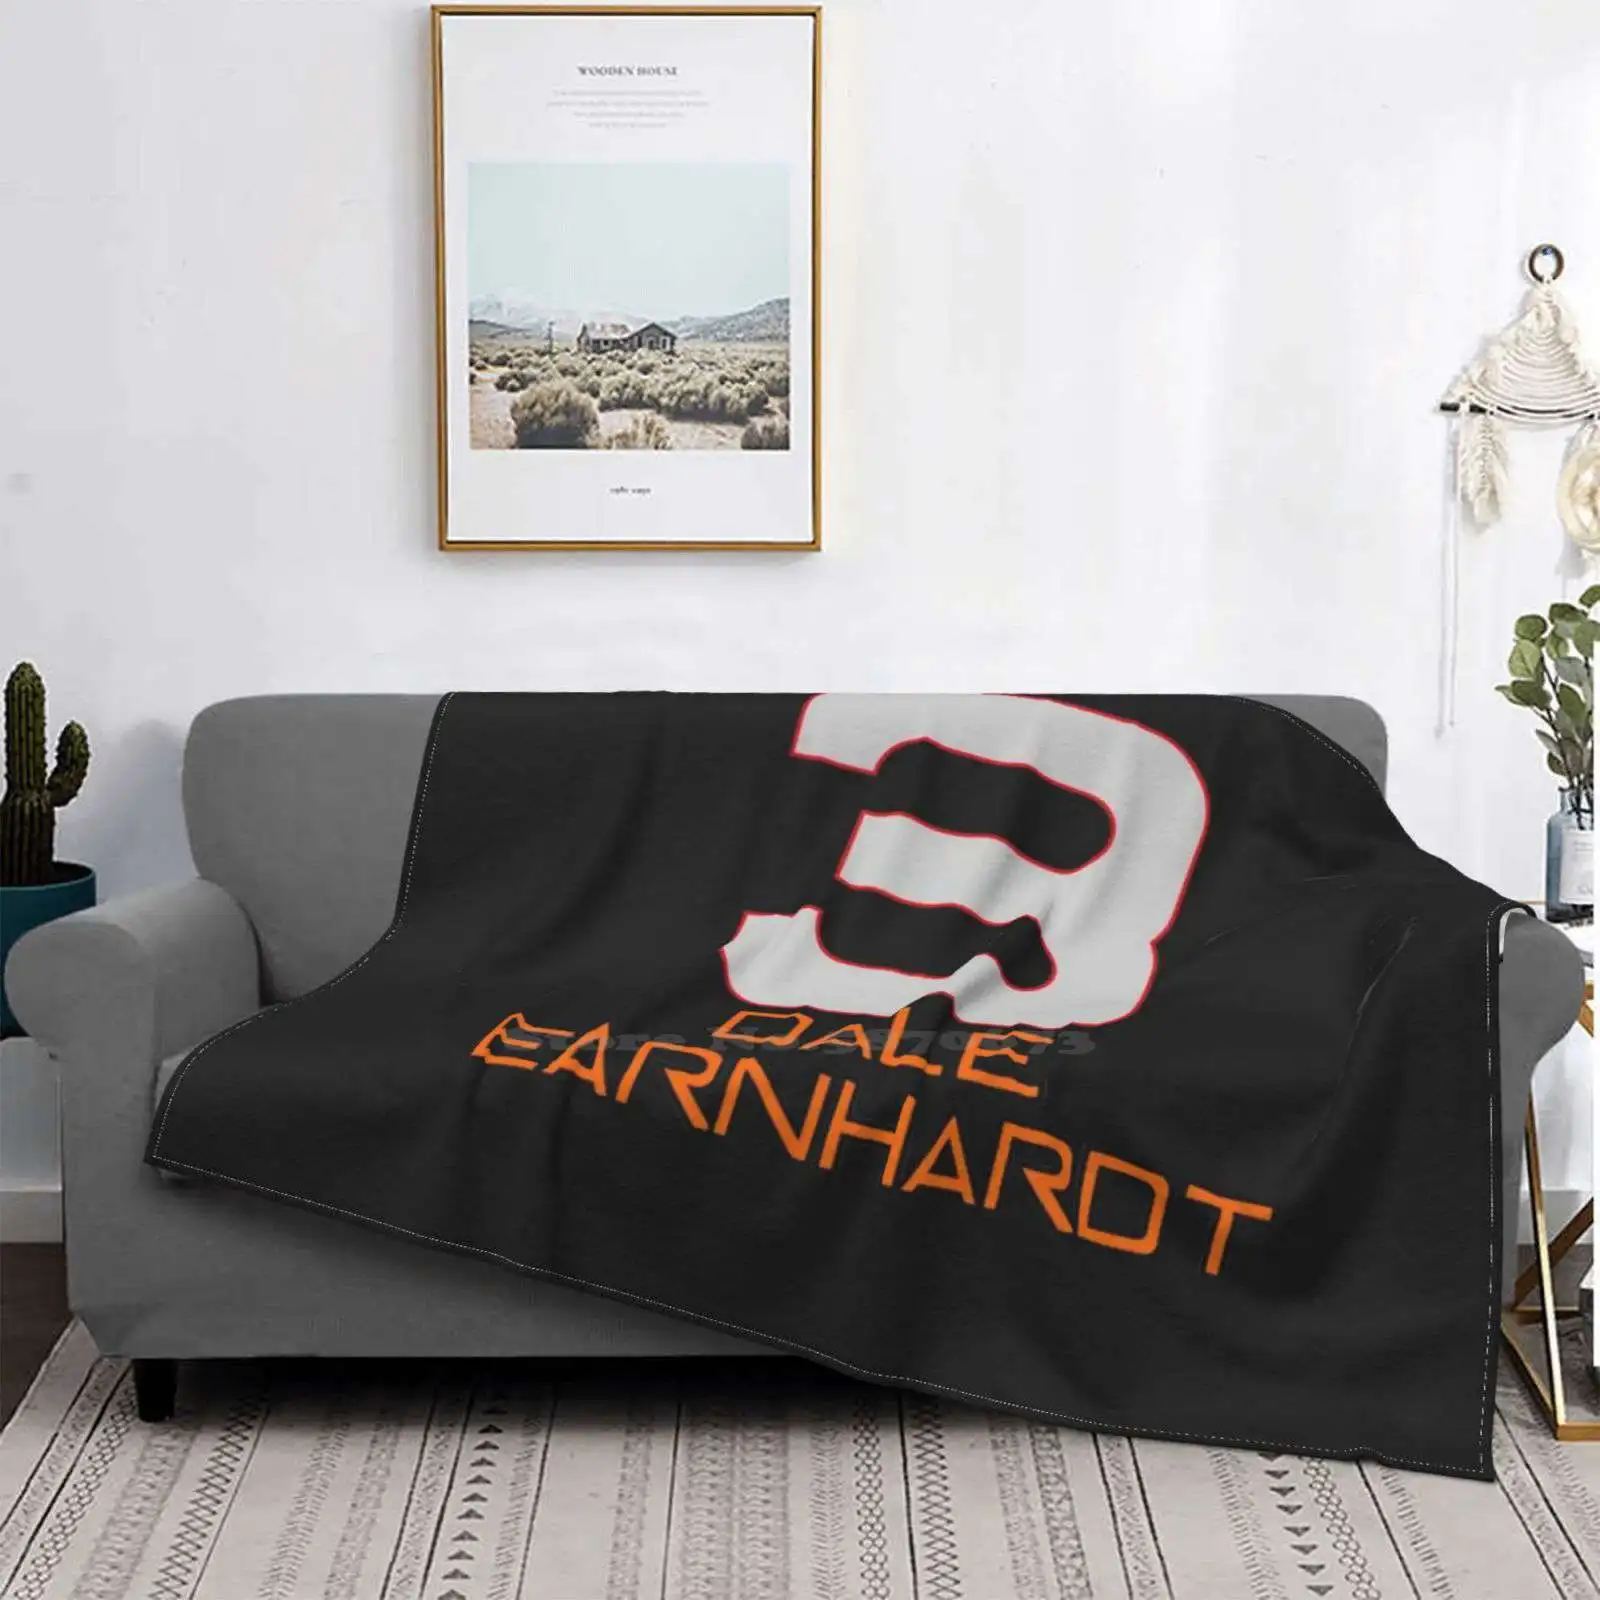 

Футболка Dale Earnhardt с креативным дизайном, удобное теплое фланелевое одеяло, Дейл ушхард, Earnhardt, Дейл гонки, Дейл младший 3 младший 88